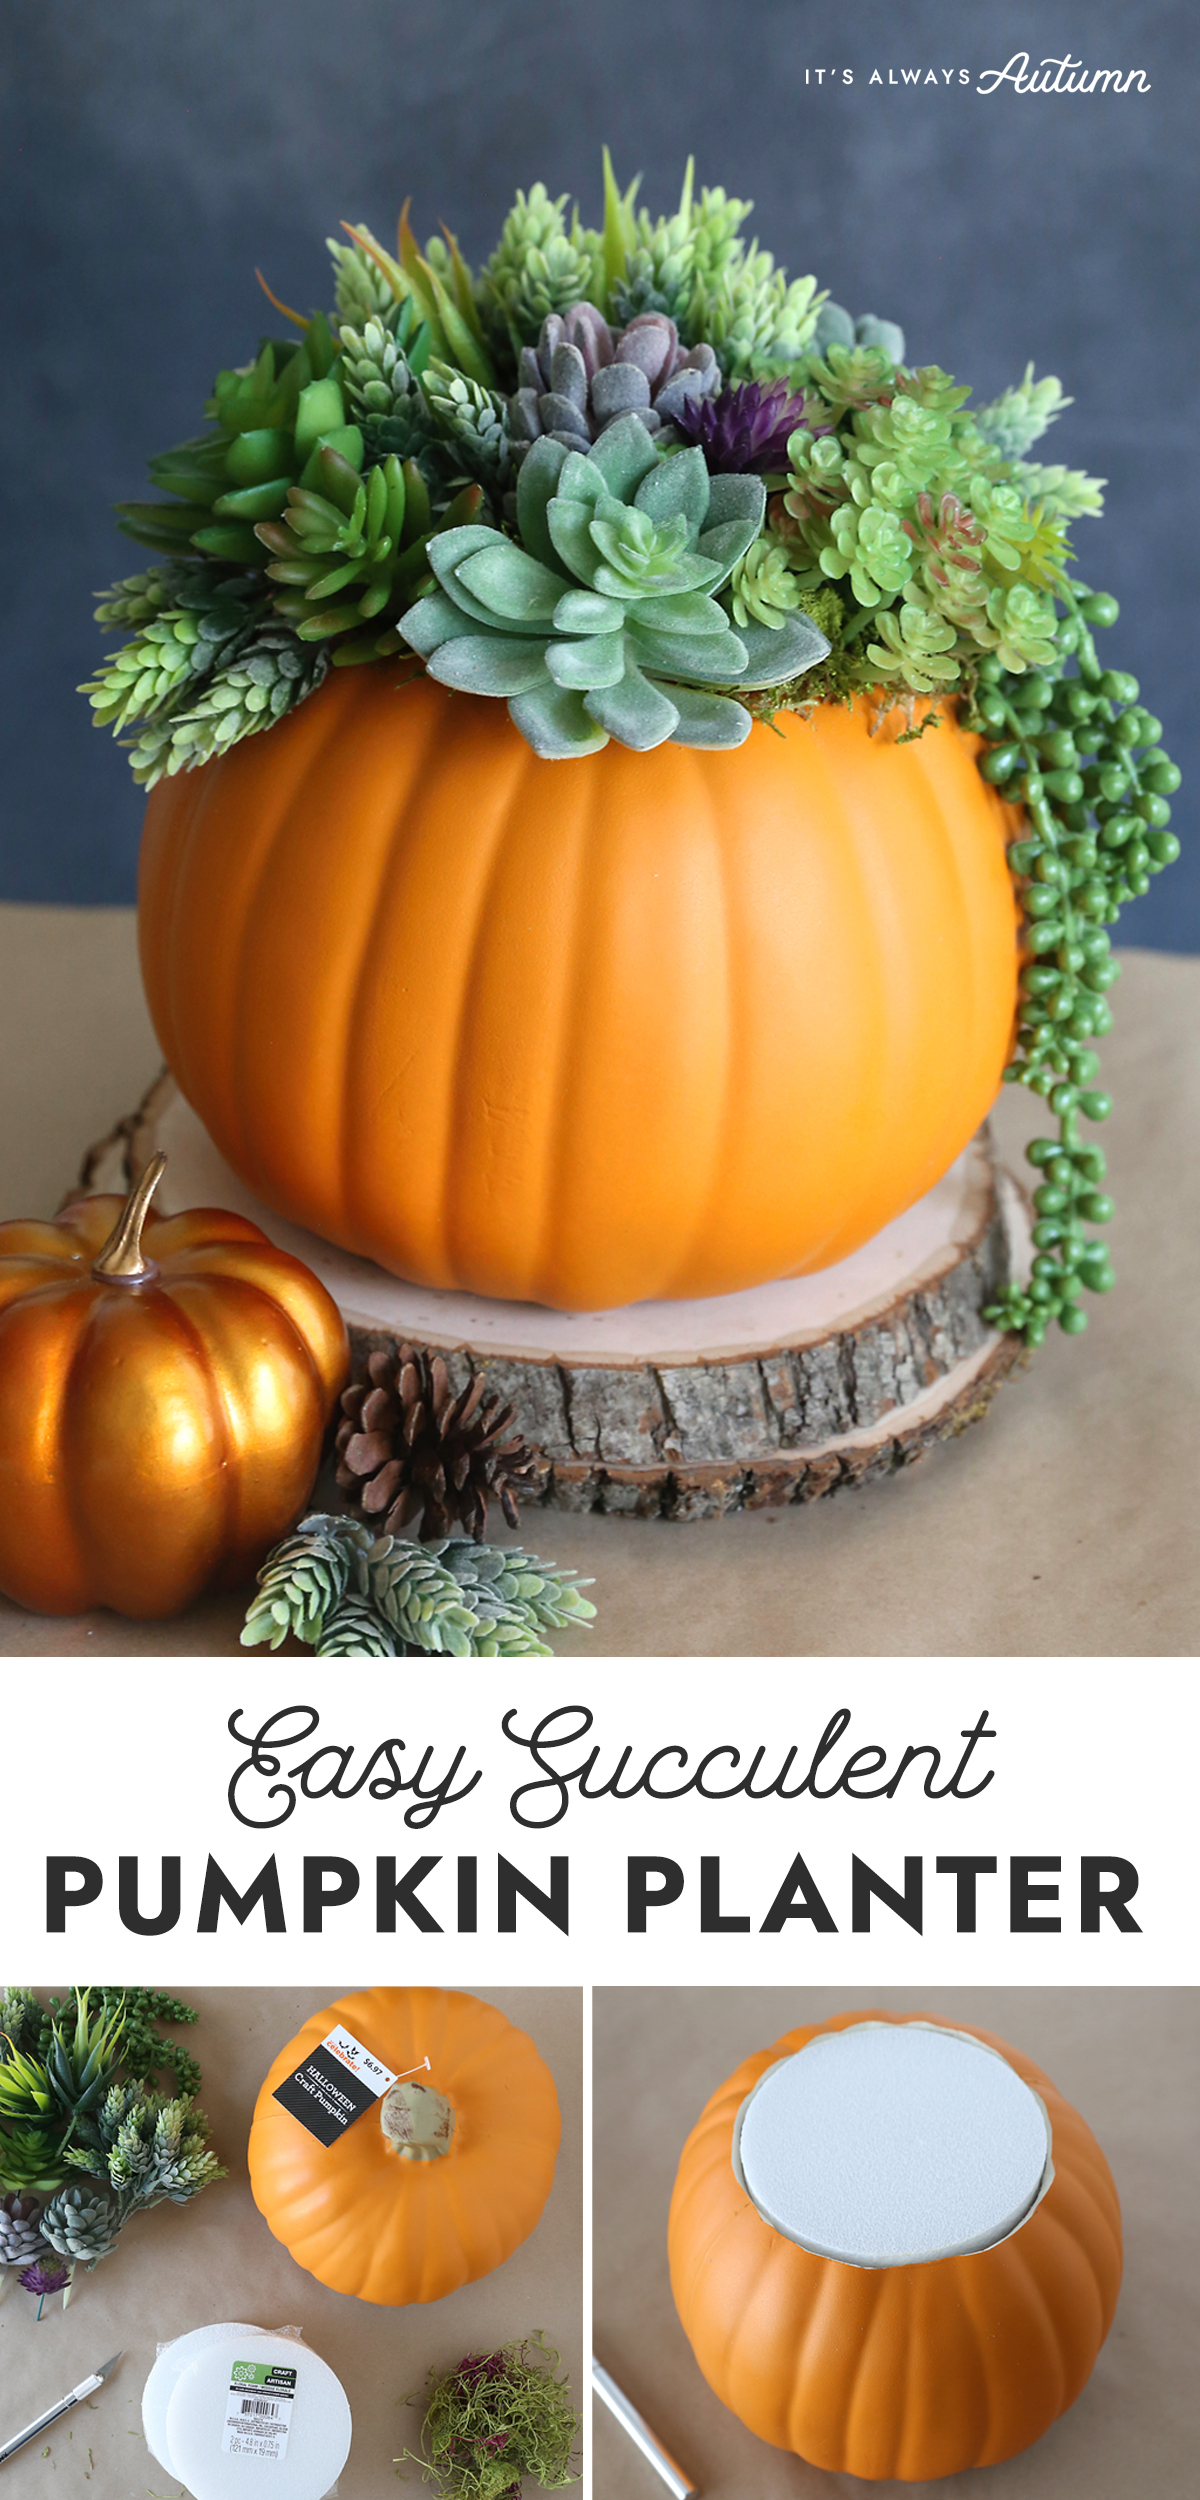 Easy Succulent Pumpkin Planter